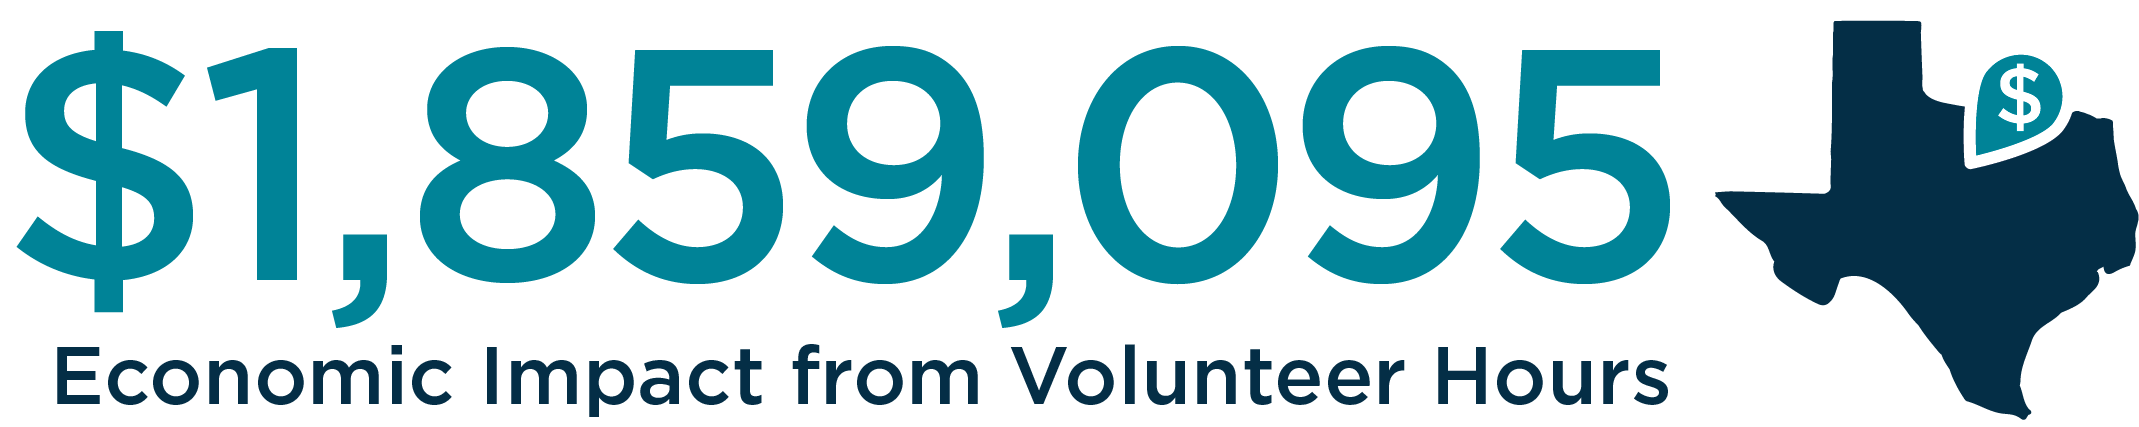 1,859,095 economic impact from volunteer hours